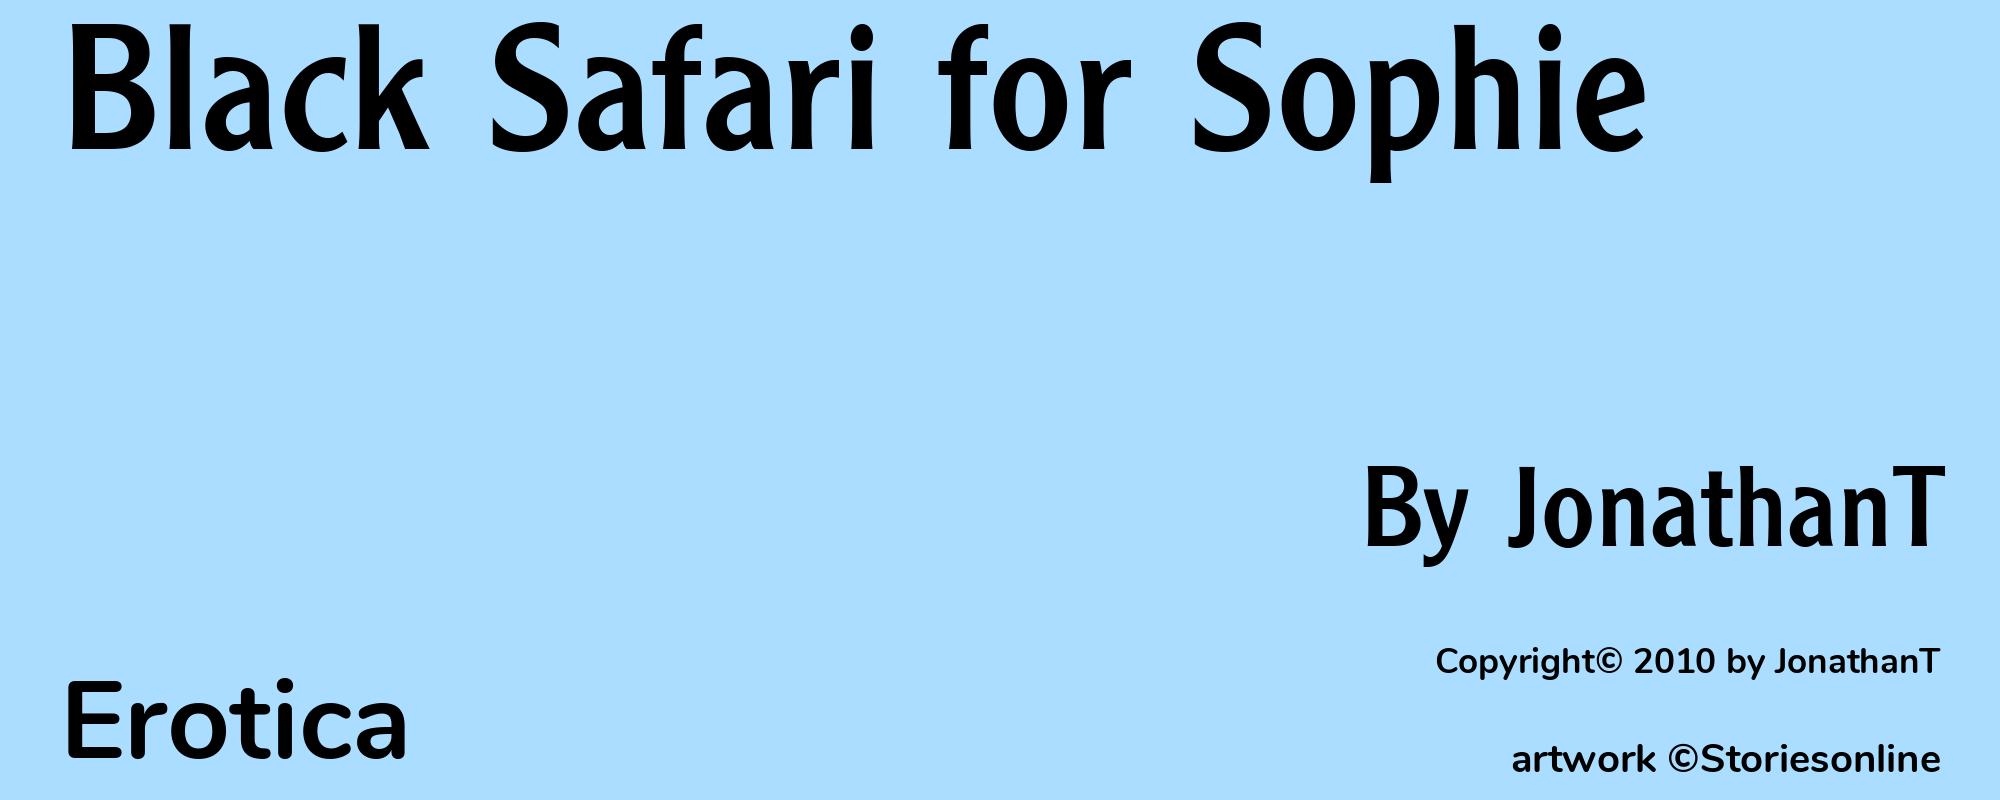 Black Safari for Sophie - Cover